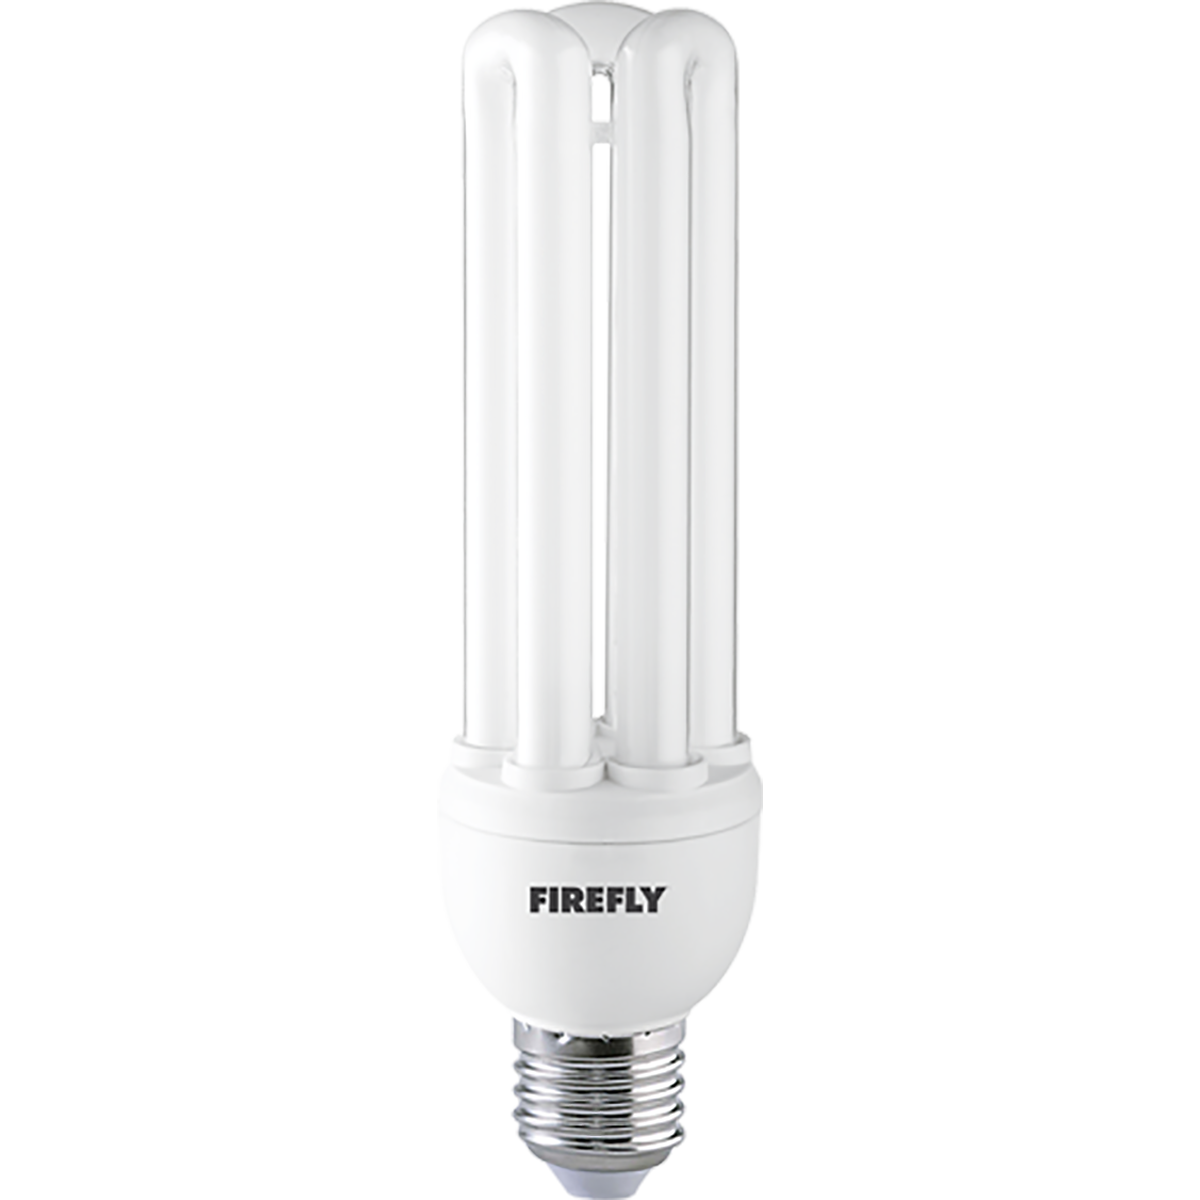 Firefly Compact 3U Fluorescent Lamp 23W